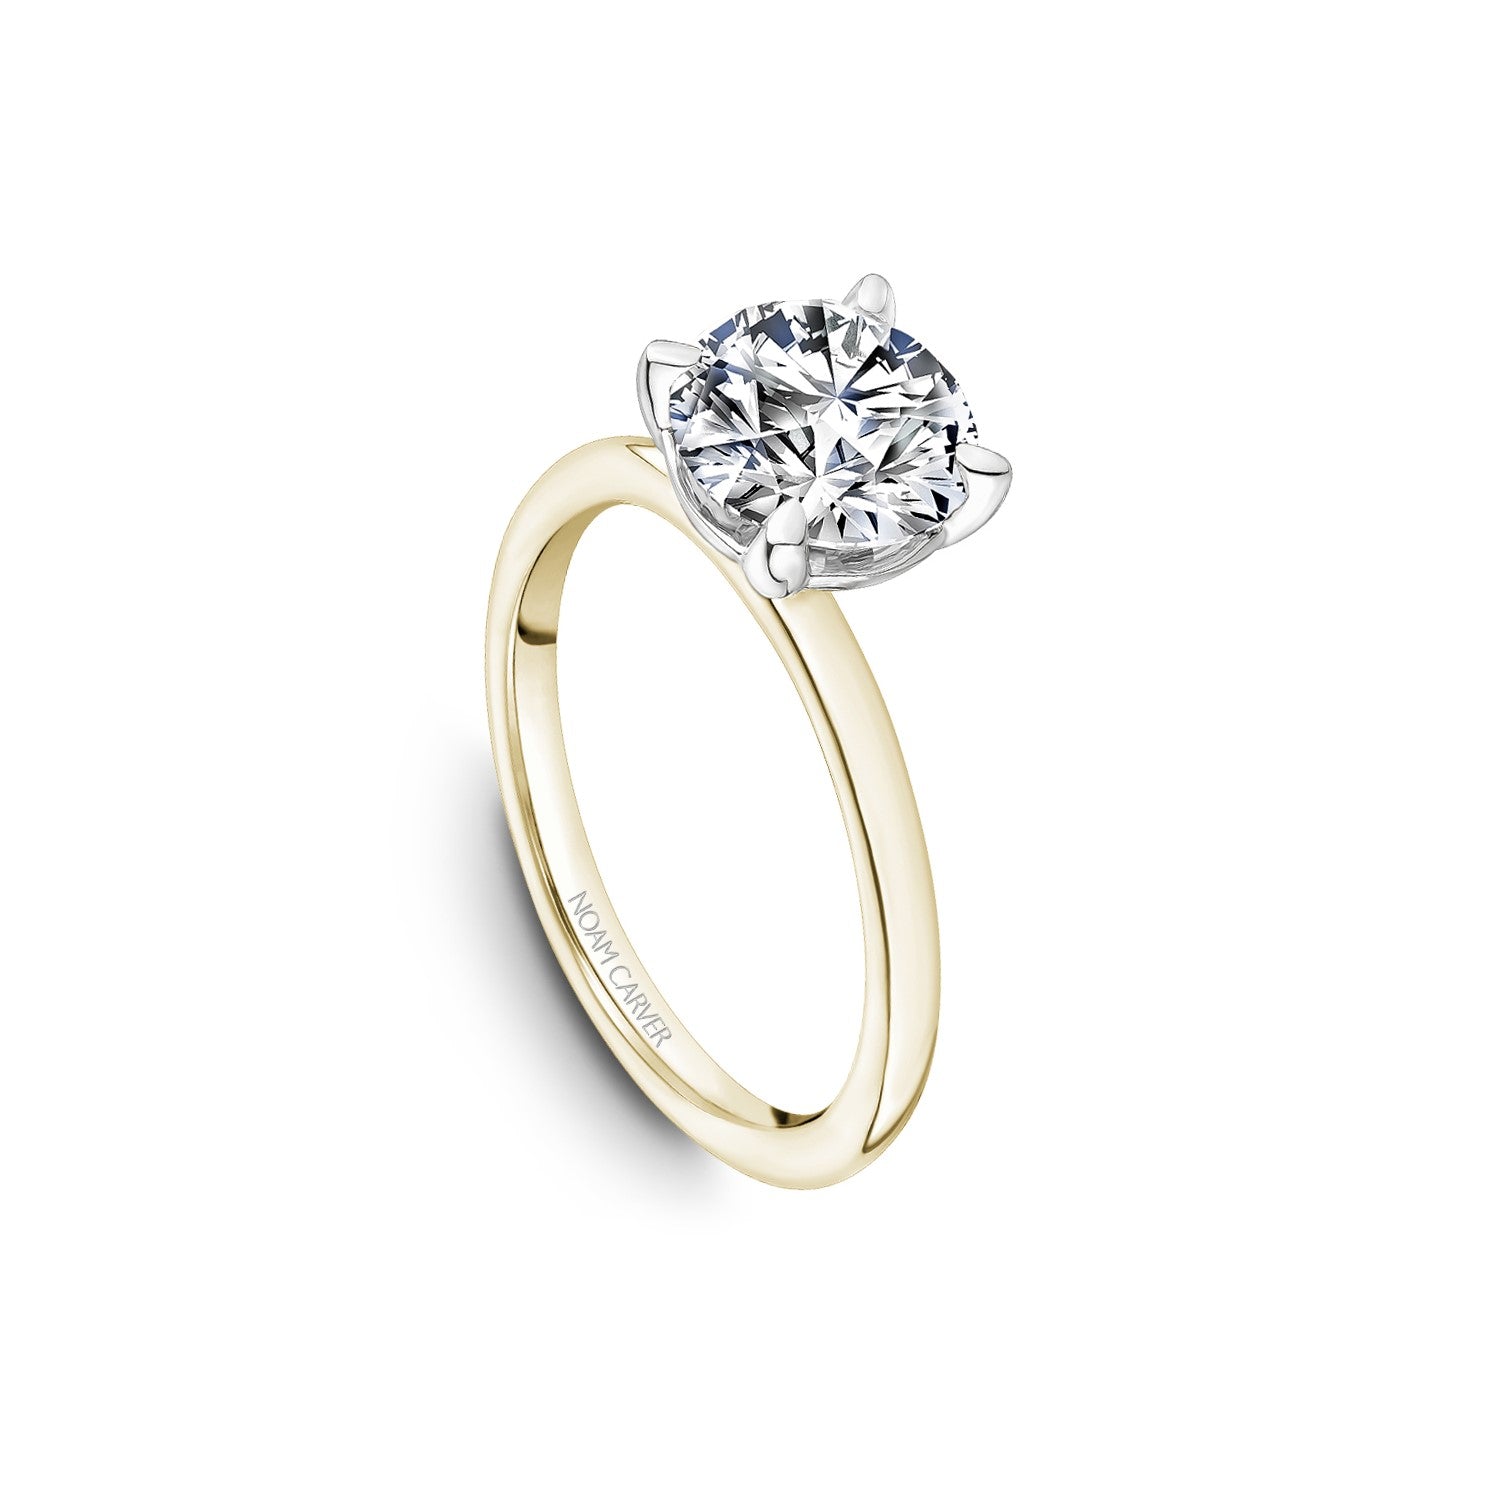 Noam Carver Round Diamond Engagement Ring